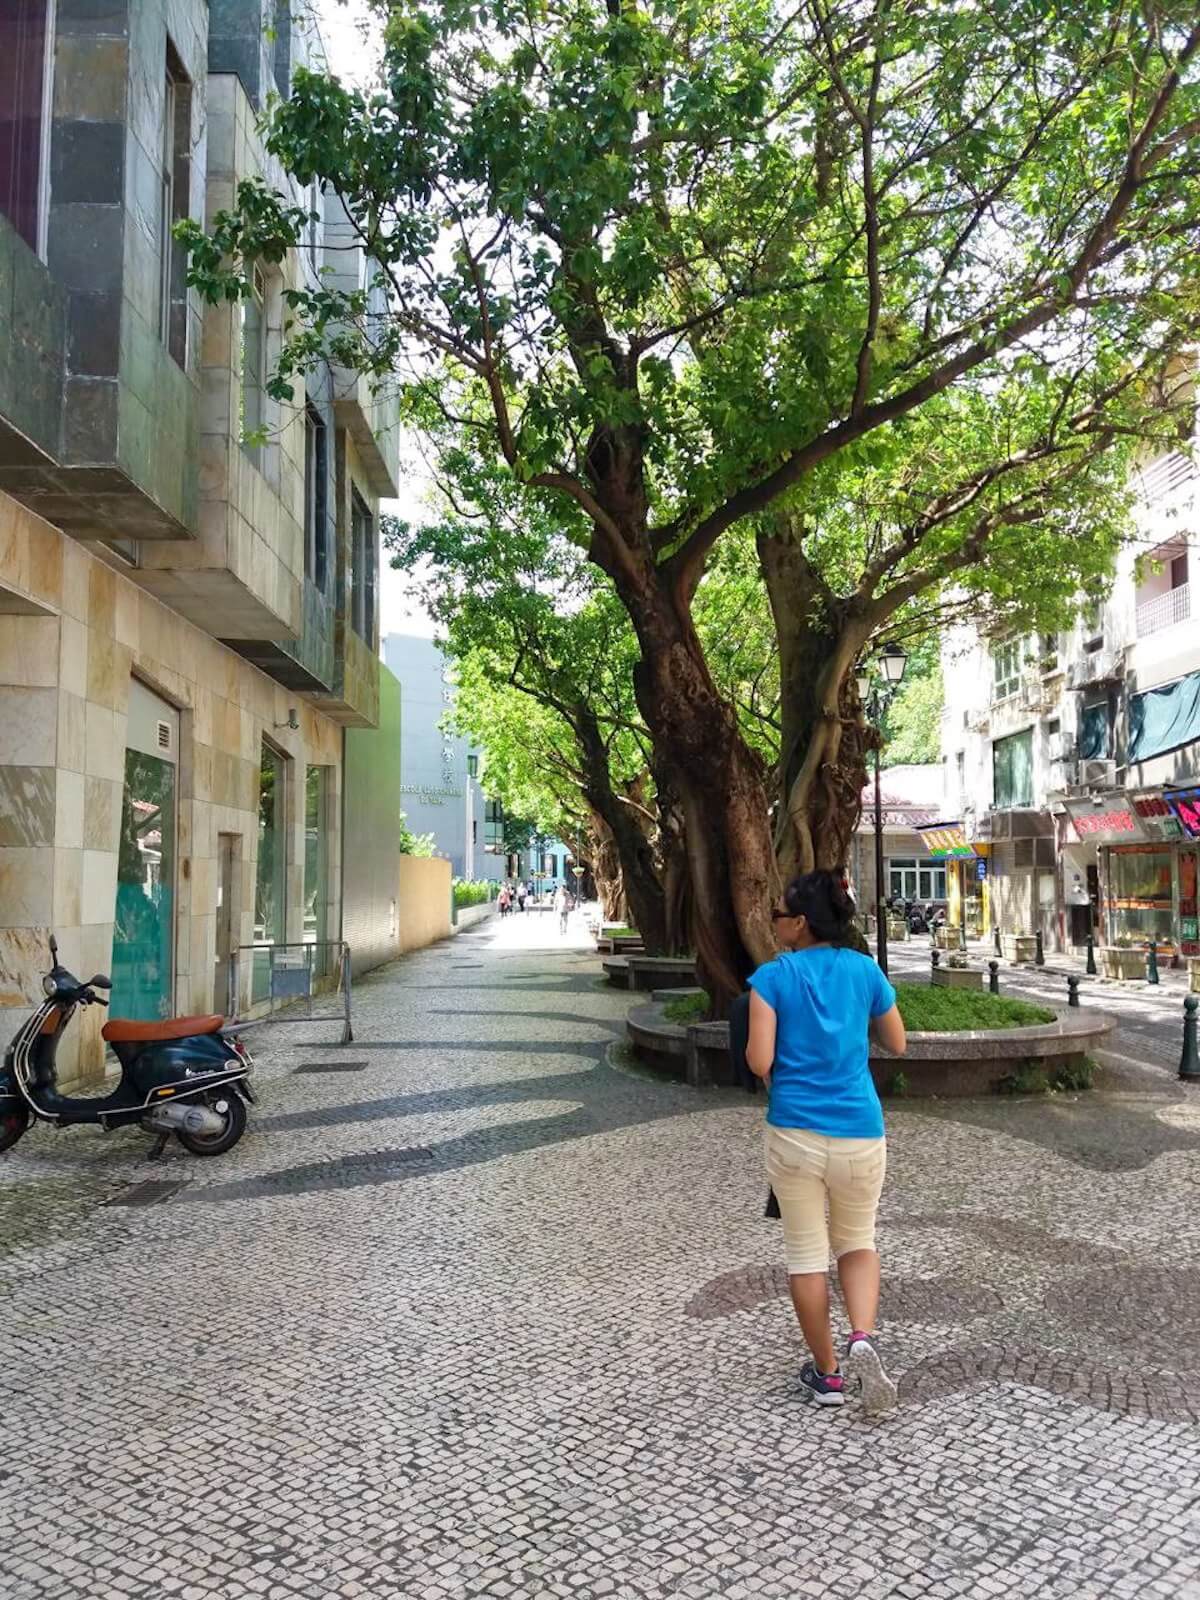 Old Taipa Village is one of new Macau tourist spots